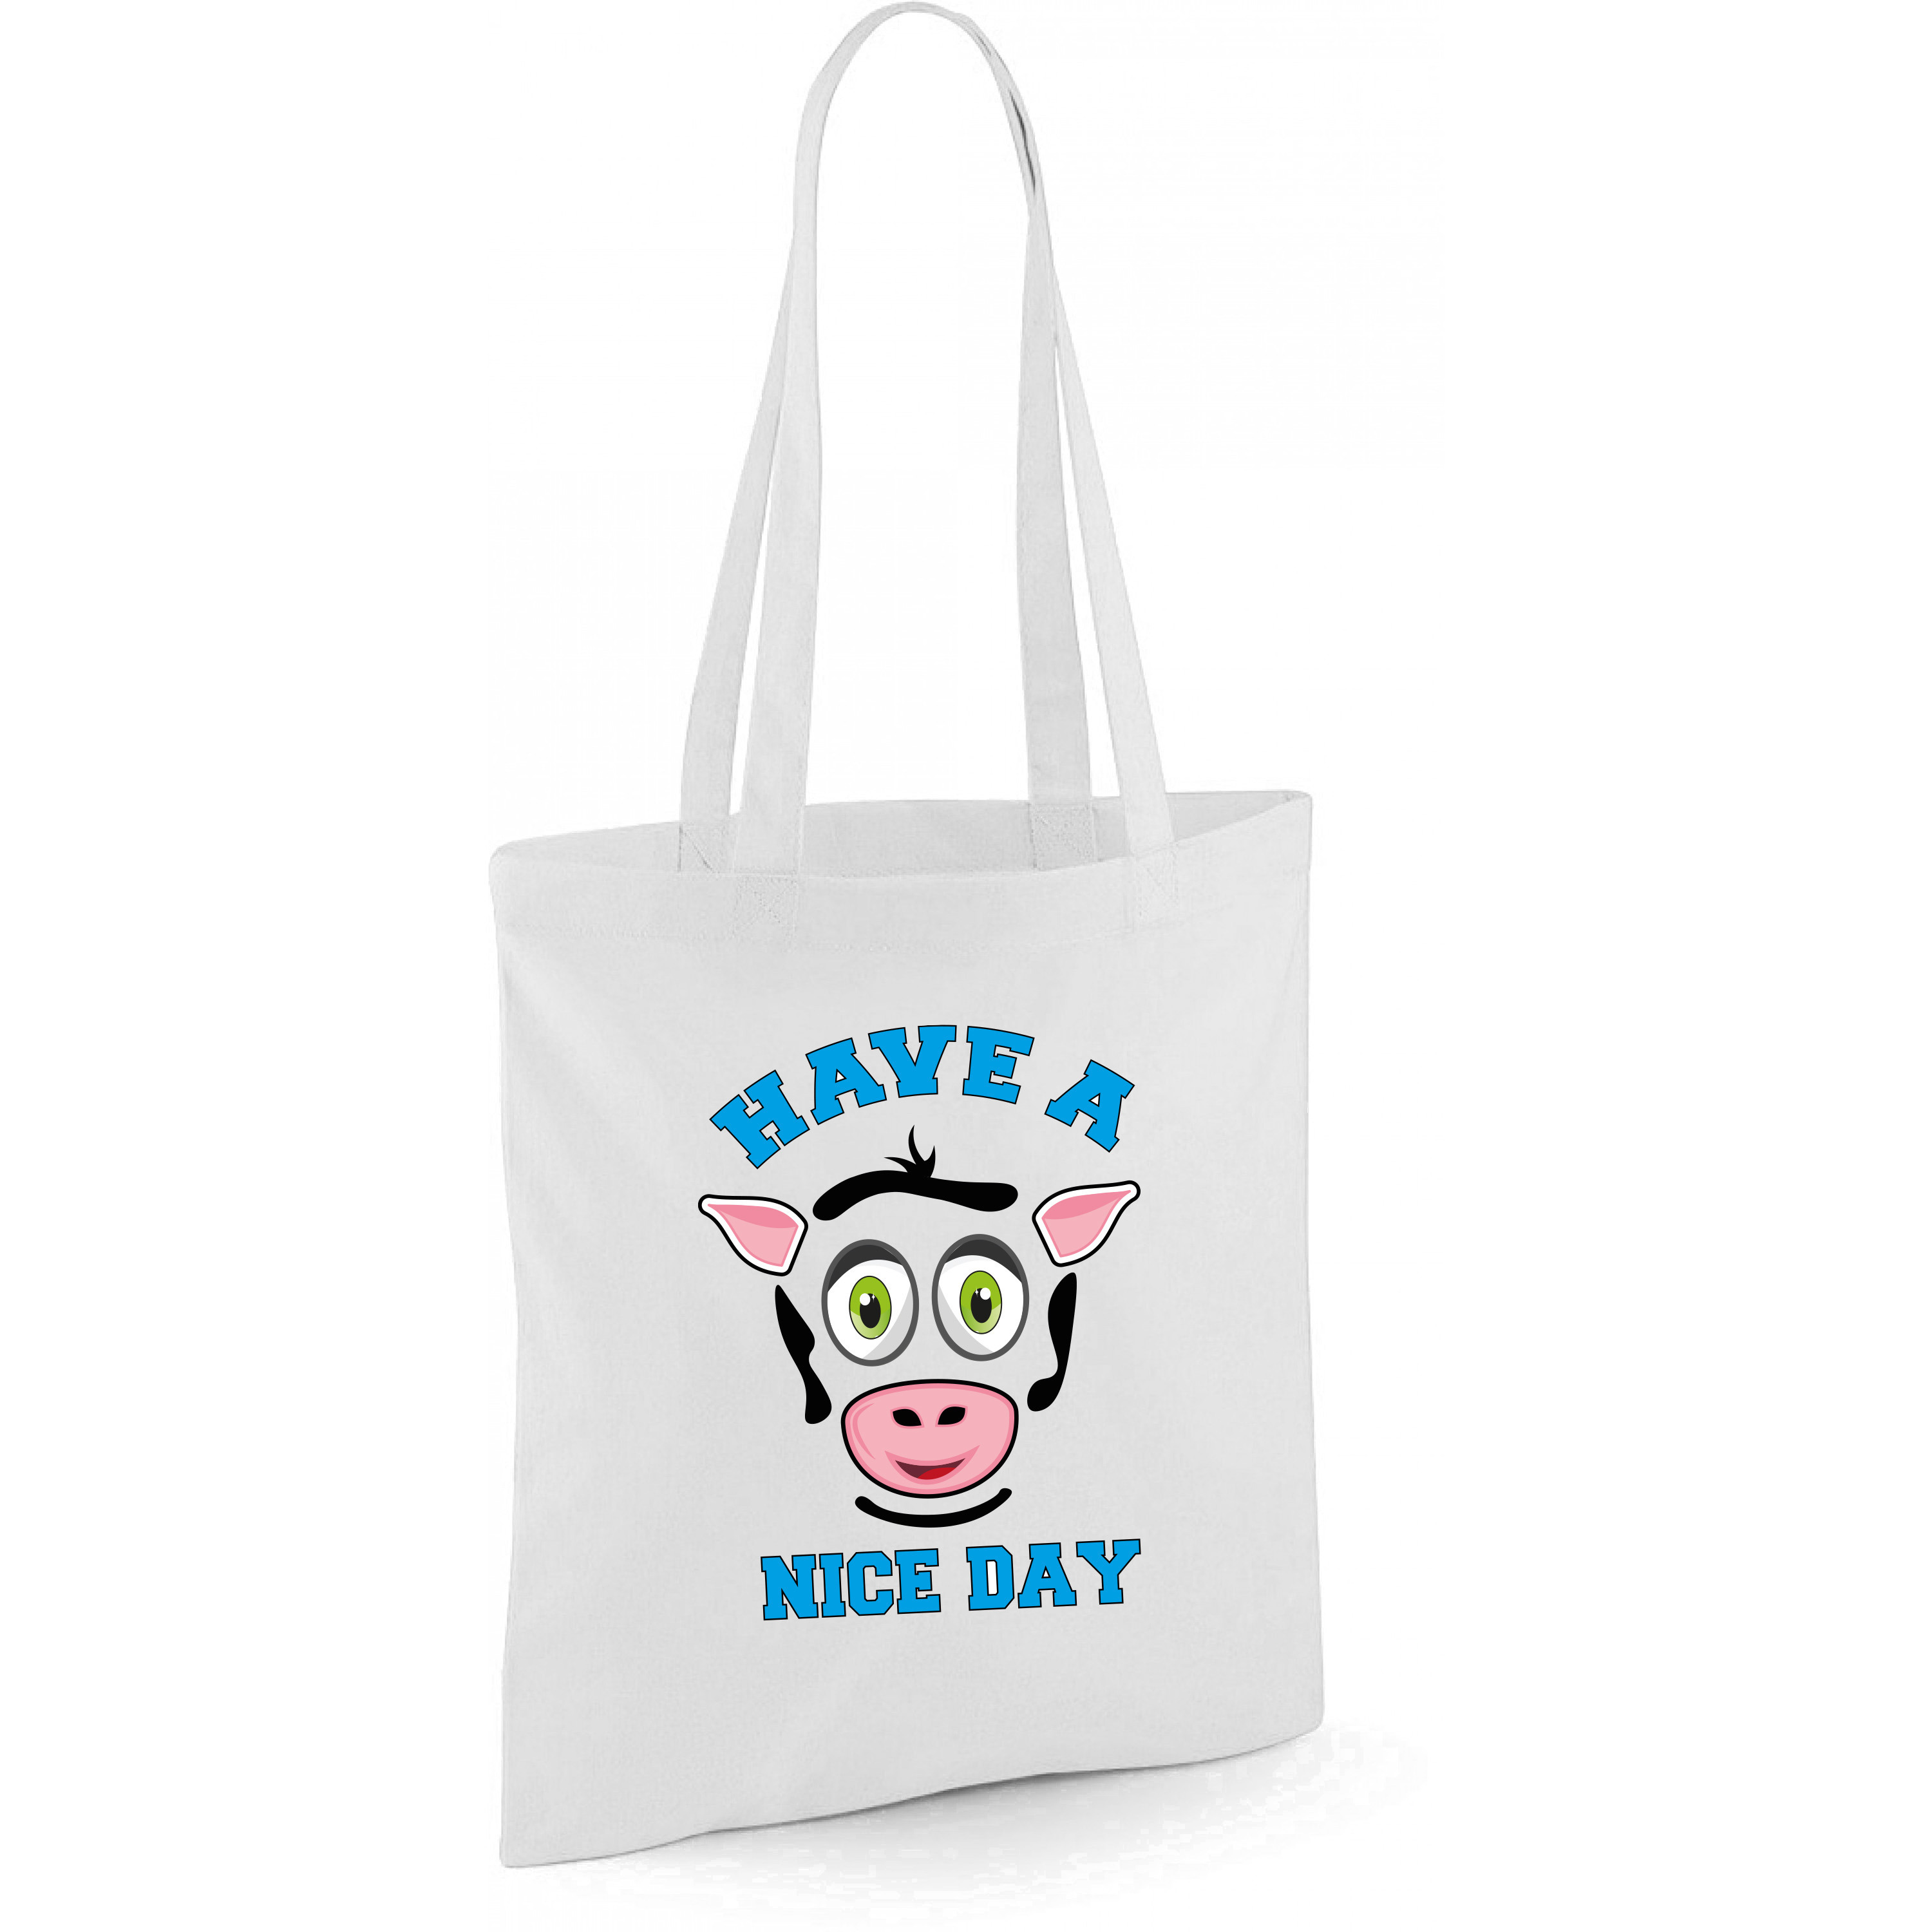 Schoudertas meisjes koe wit have a nice day 42 x 38 cm shopper-tote bag